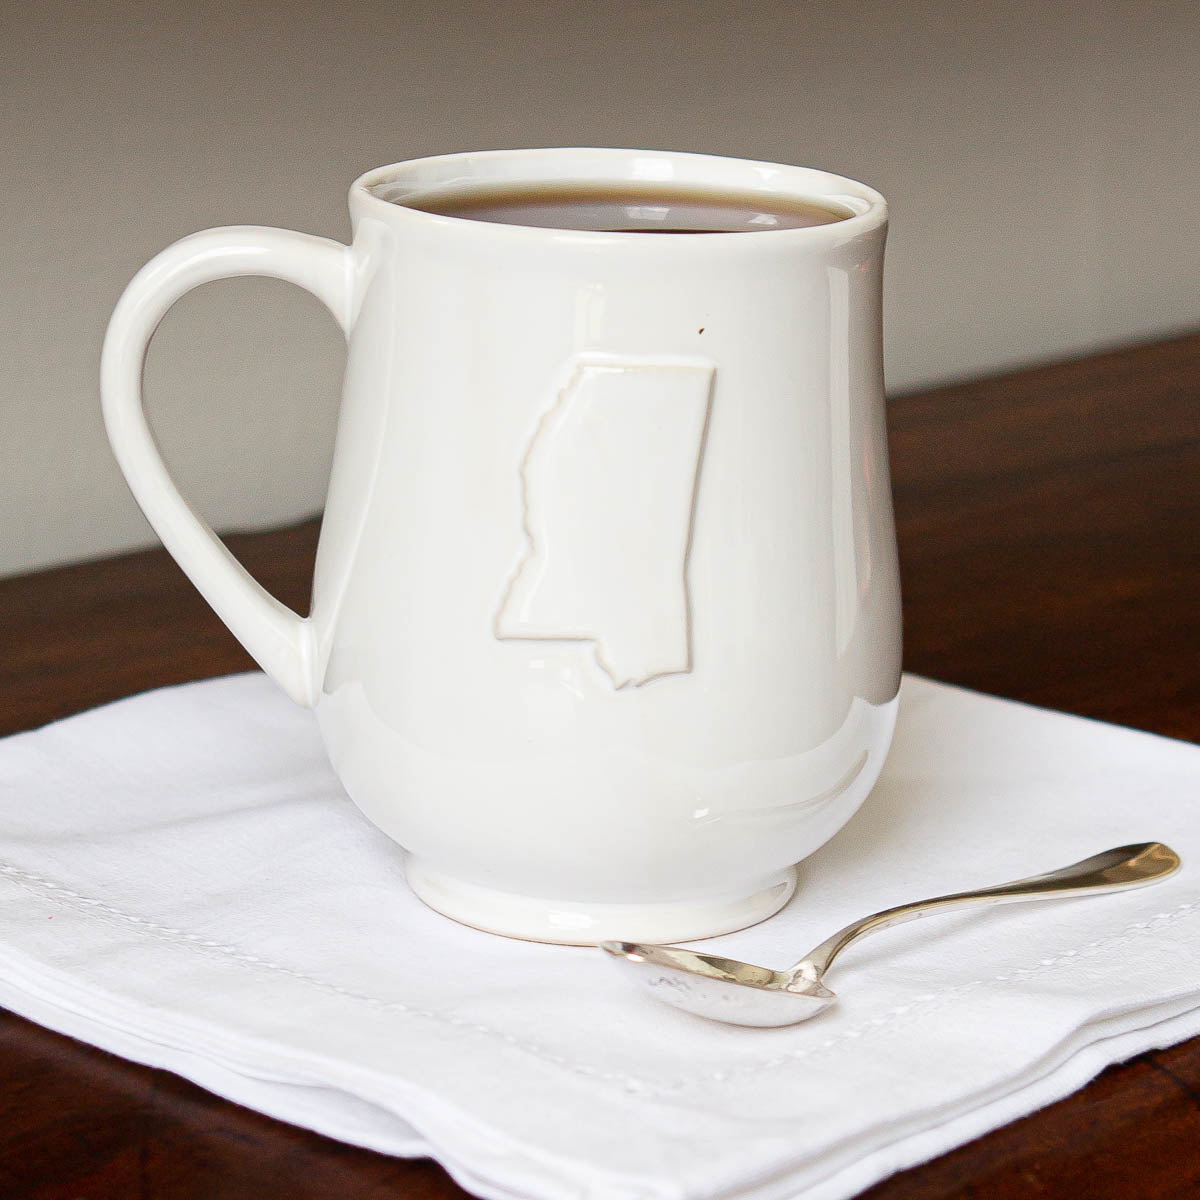 Mississippi Coffee Mug